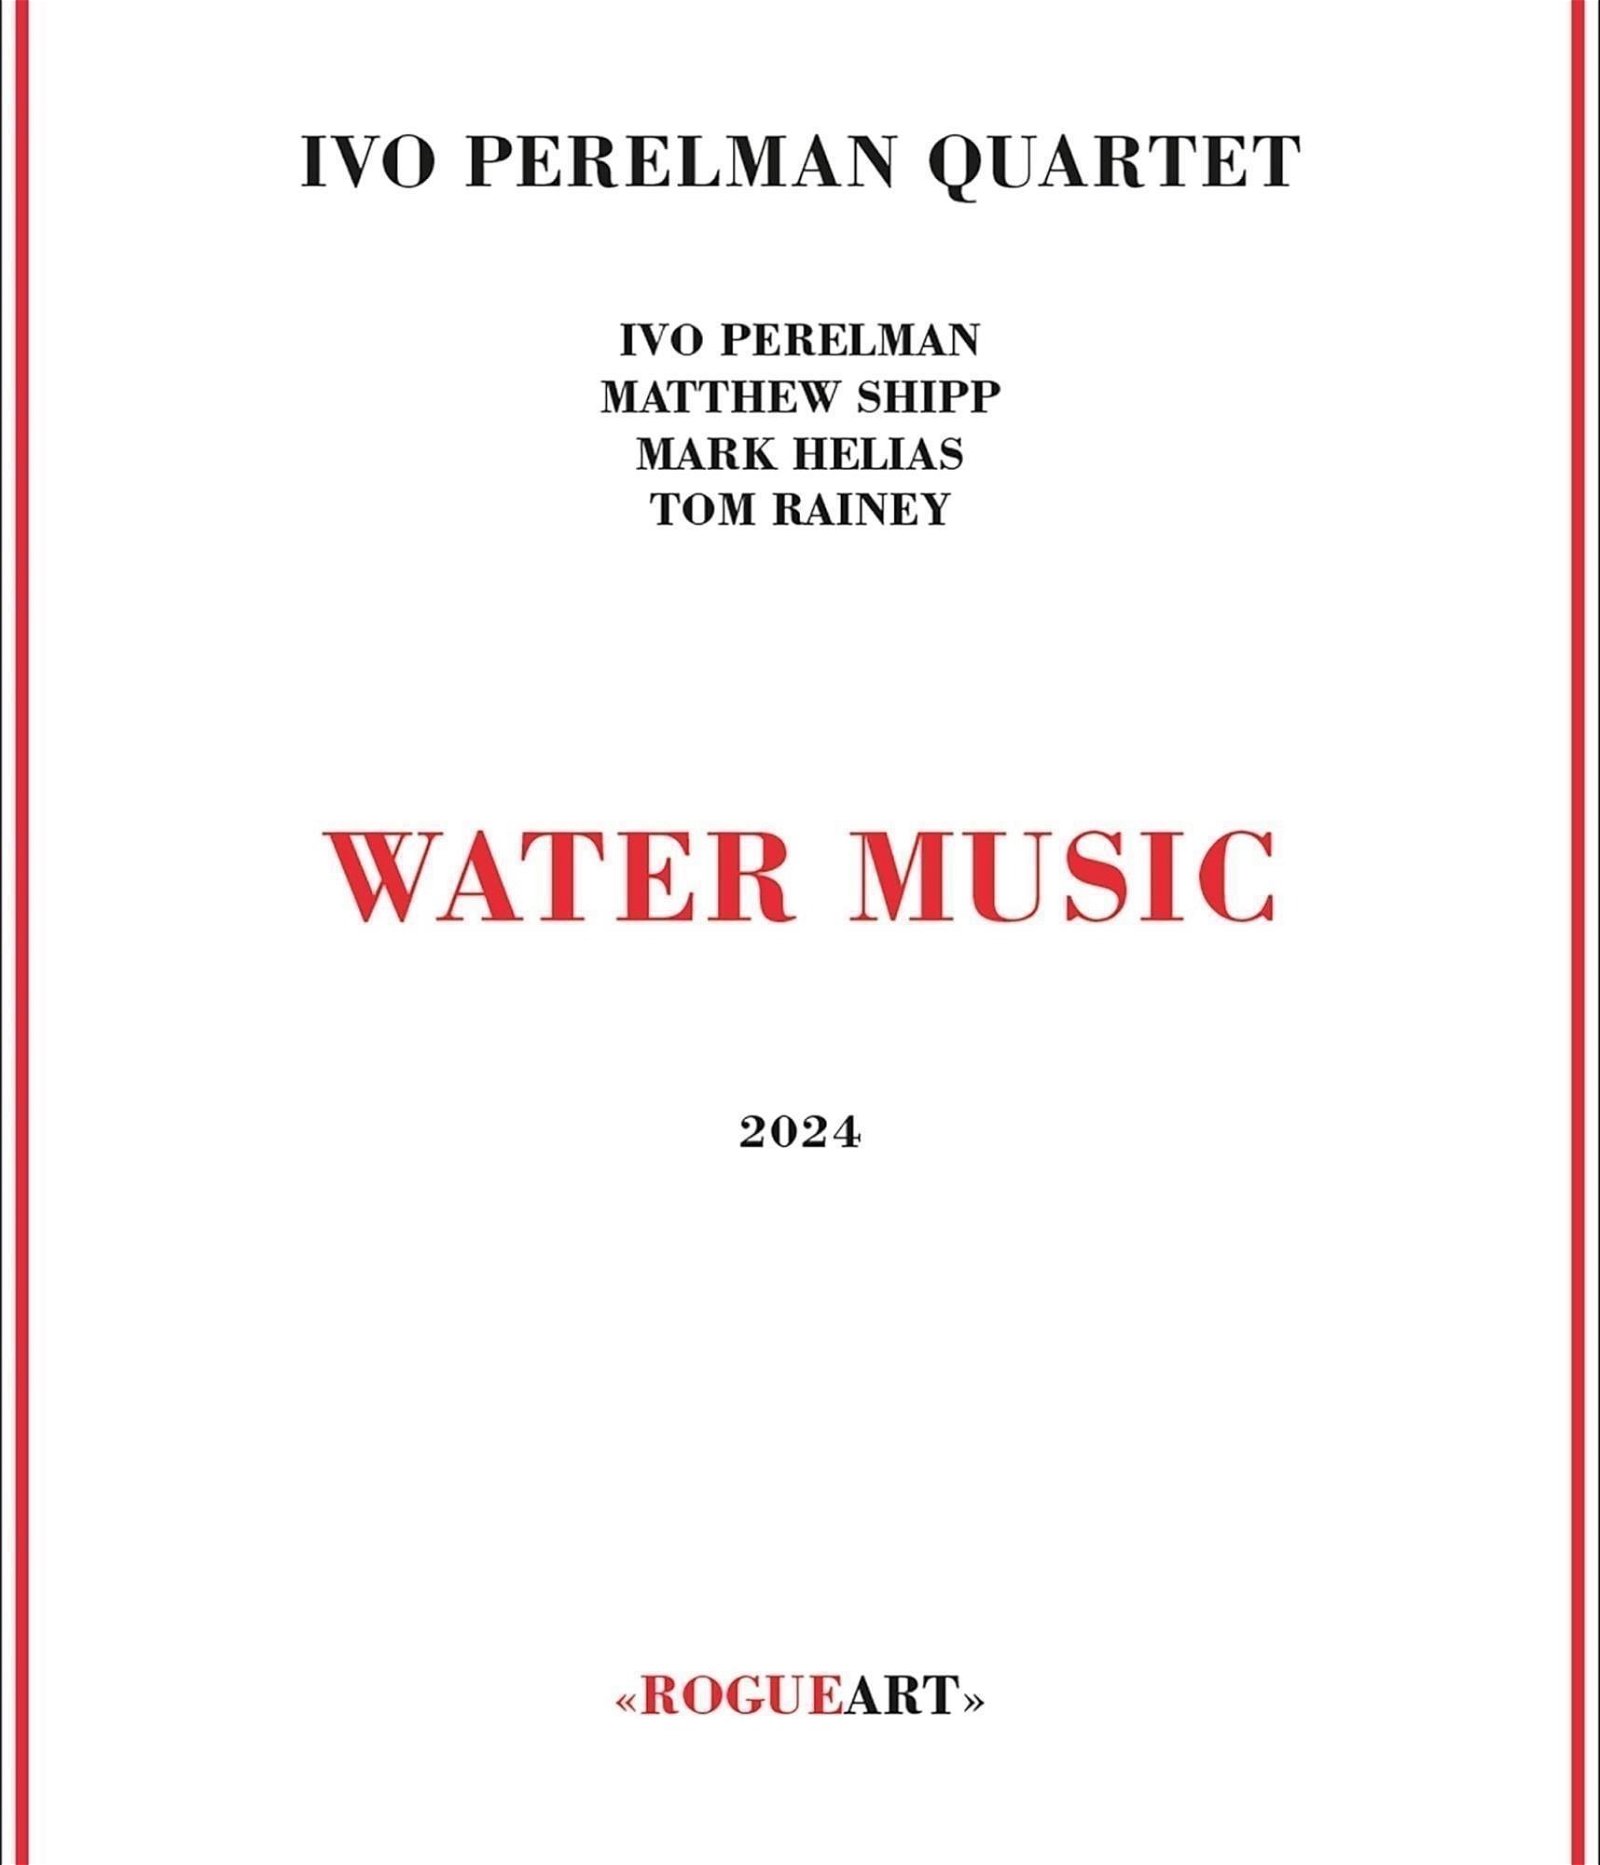 CD Shop - IVO PERELMAN QUARTET WATER MUSIC